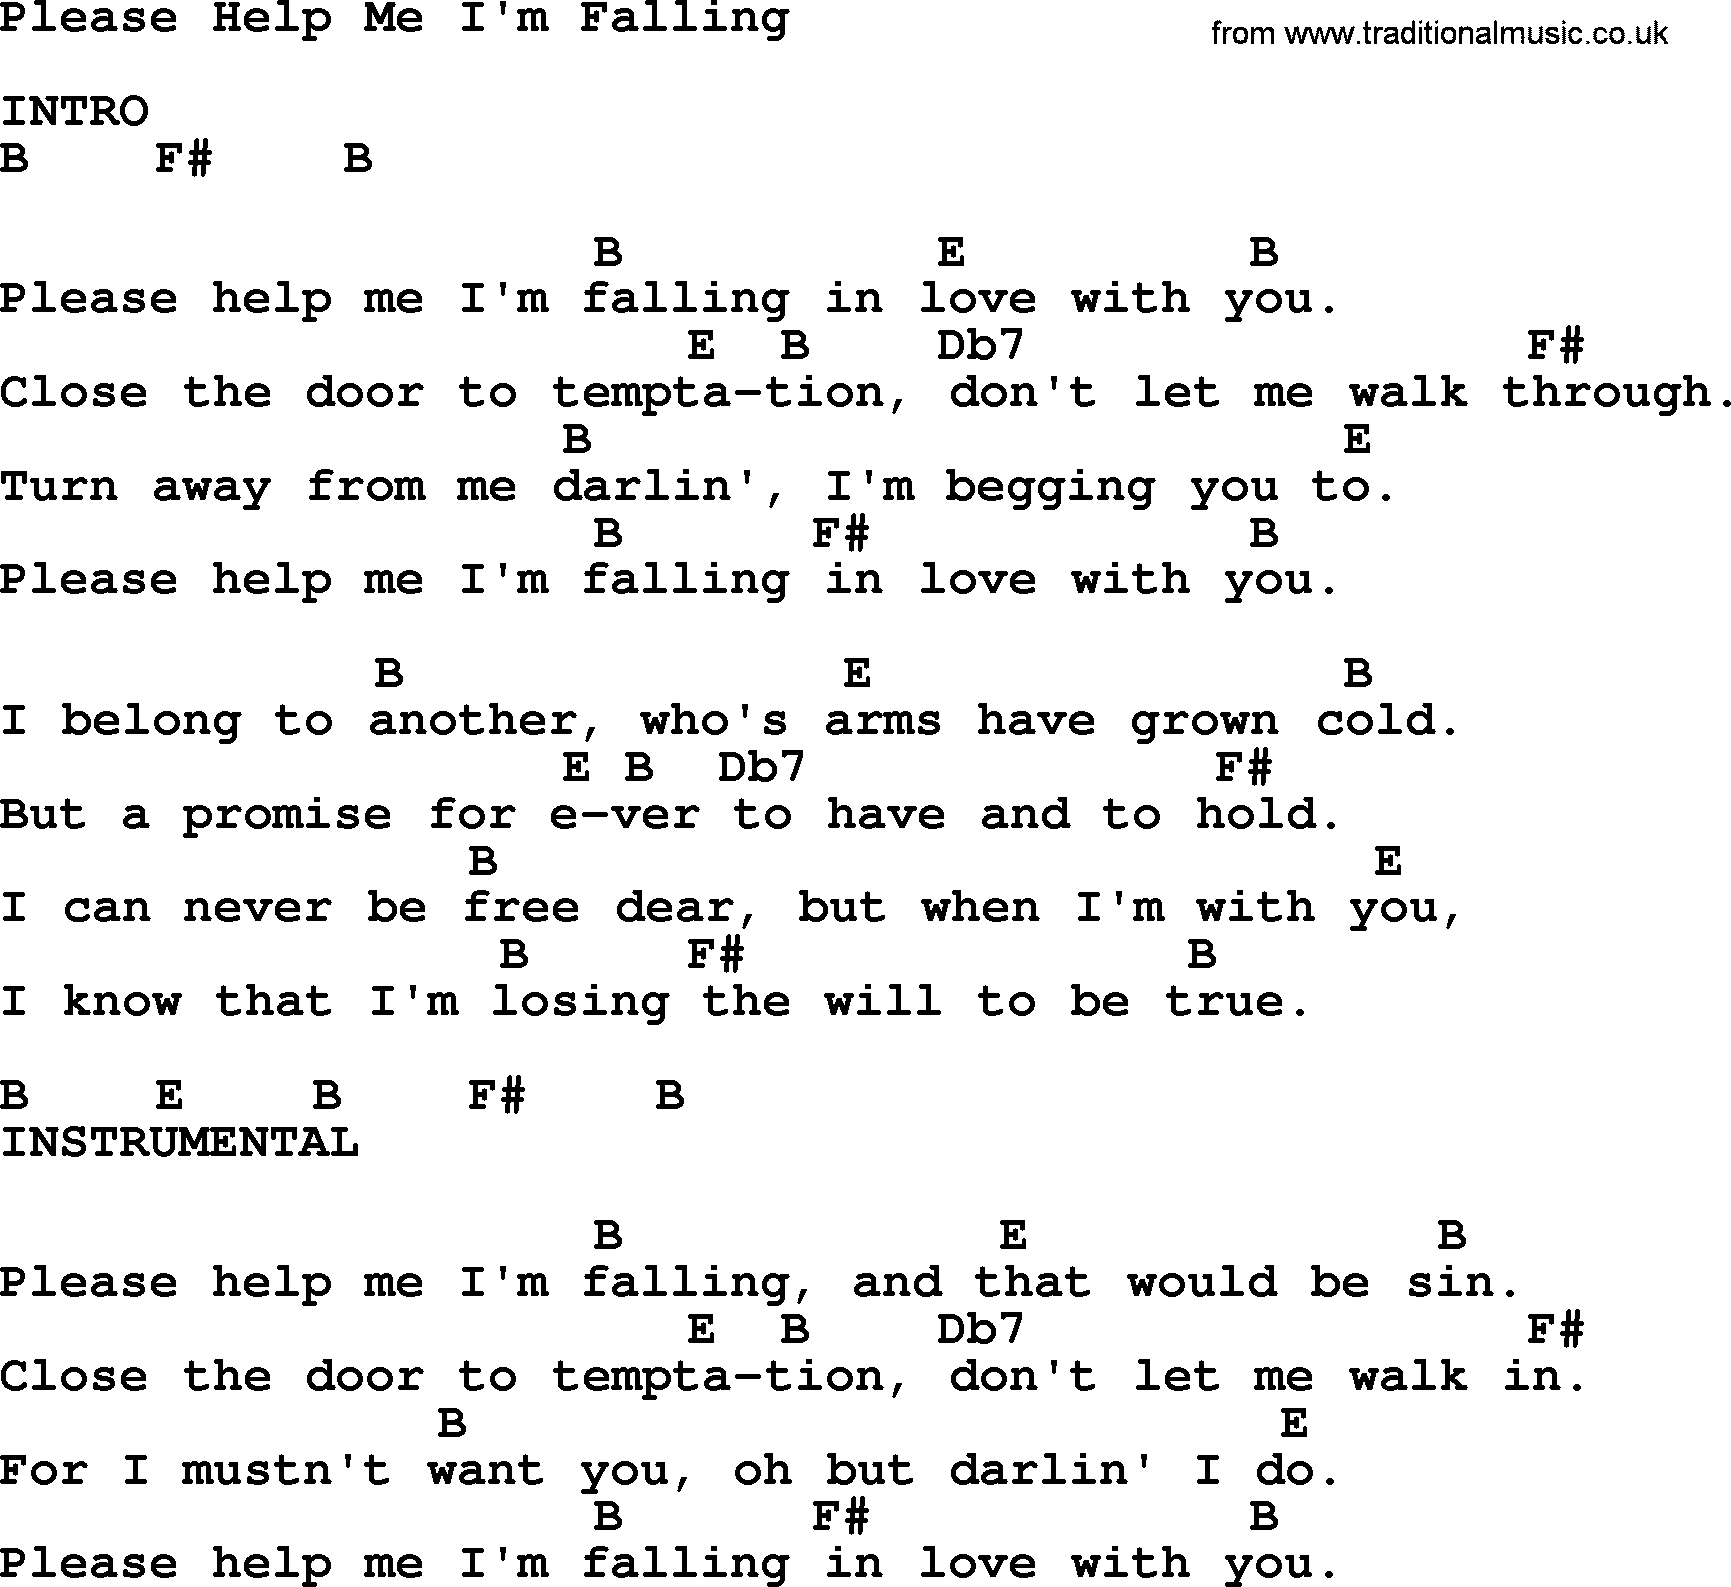 Loretta Lynn song: Please Help Me I'm Falling lyrics and chords